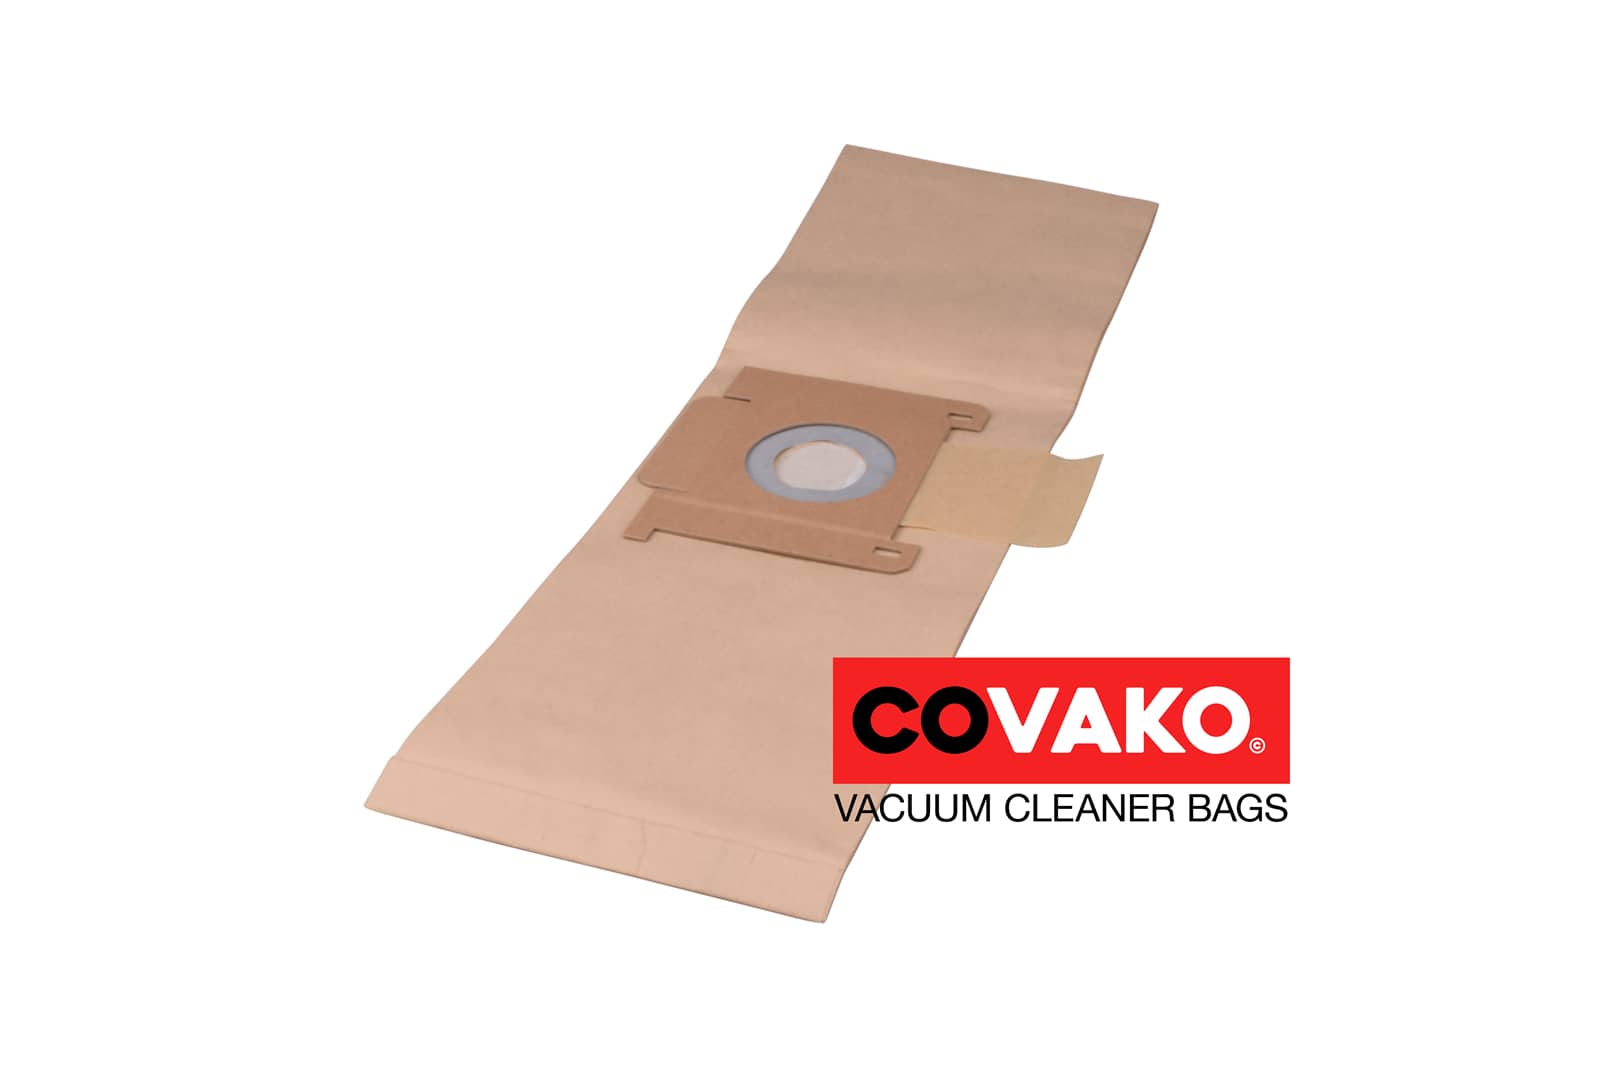 Clean a la Card Compacto 6 / Paper - Clean a la Card vacuum cleaner bags